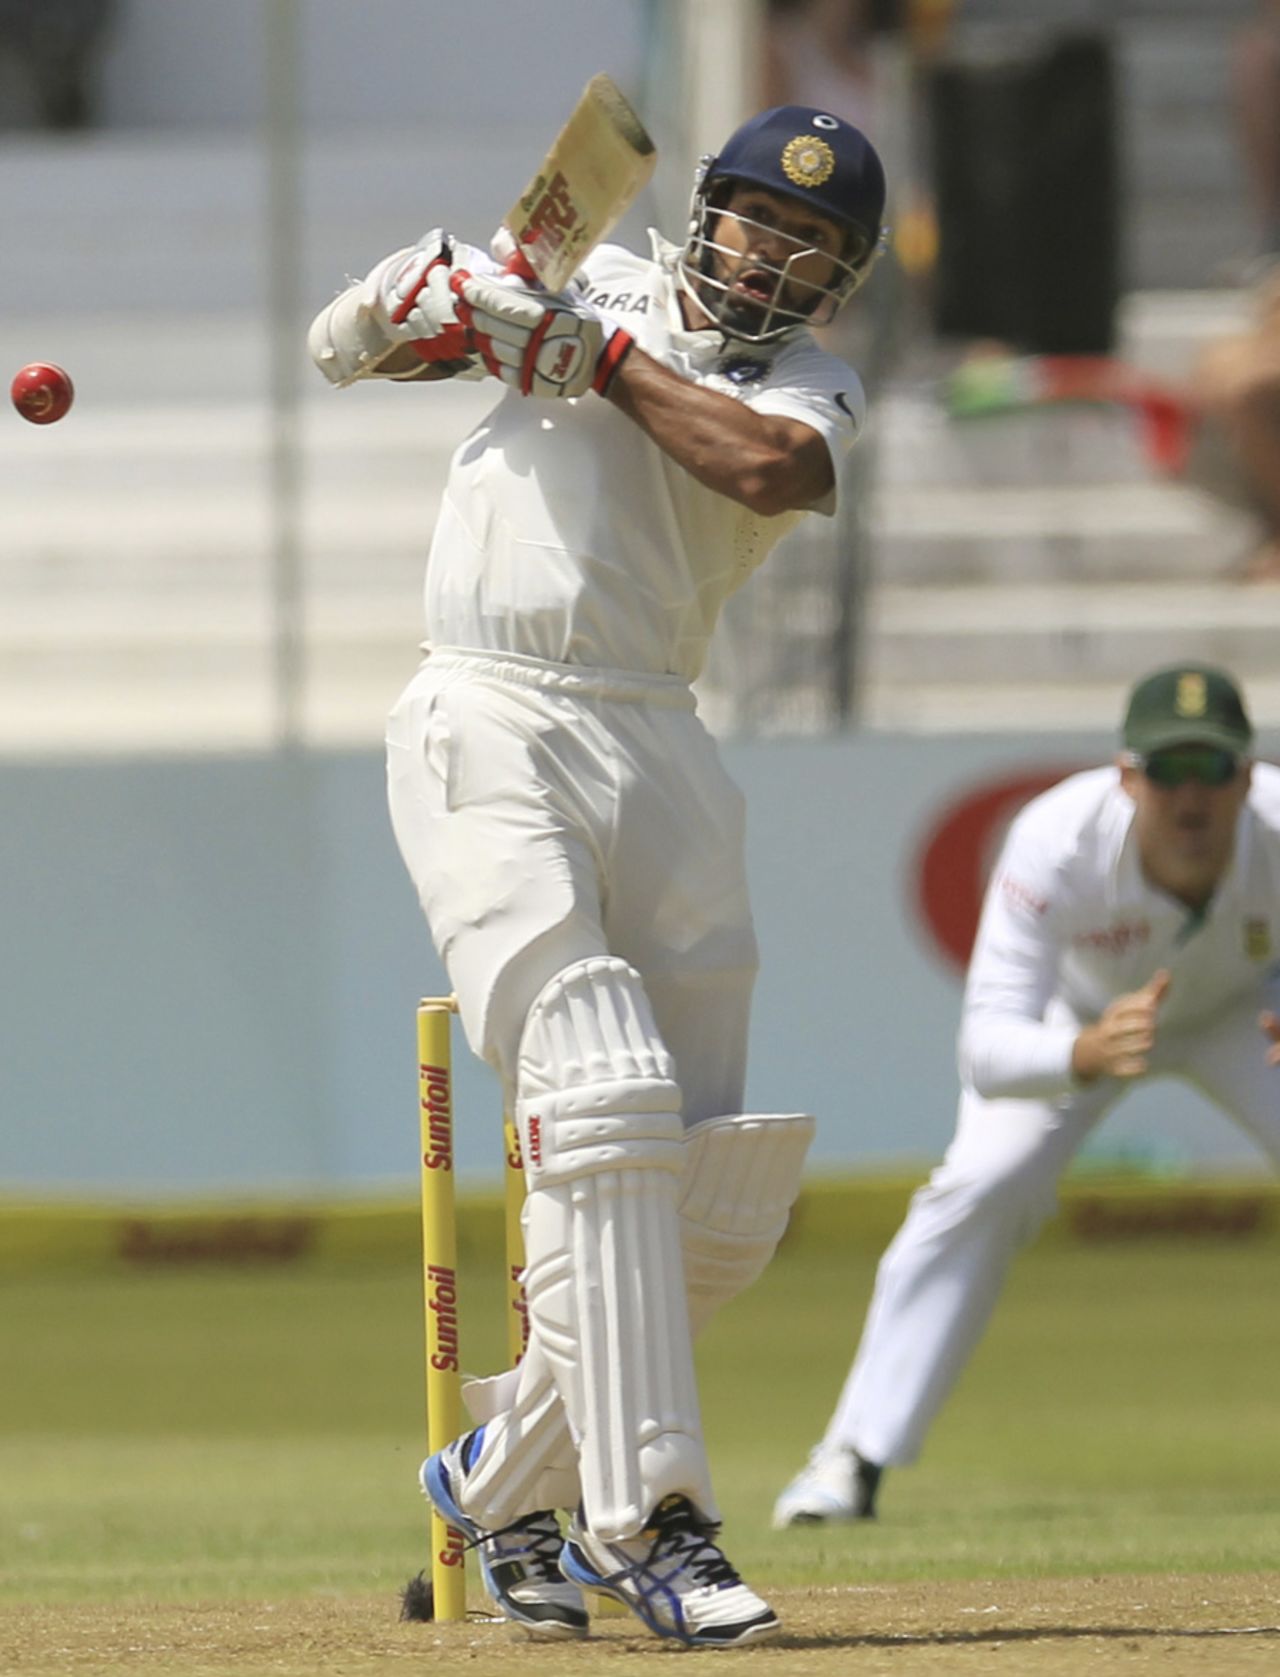 Shikhar Dhawan pulls, South Africa v India, 2nd Test, Durban, 1st day, December 26, 2013